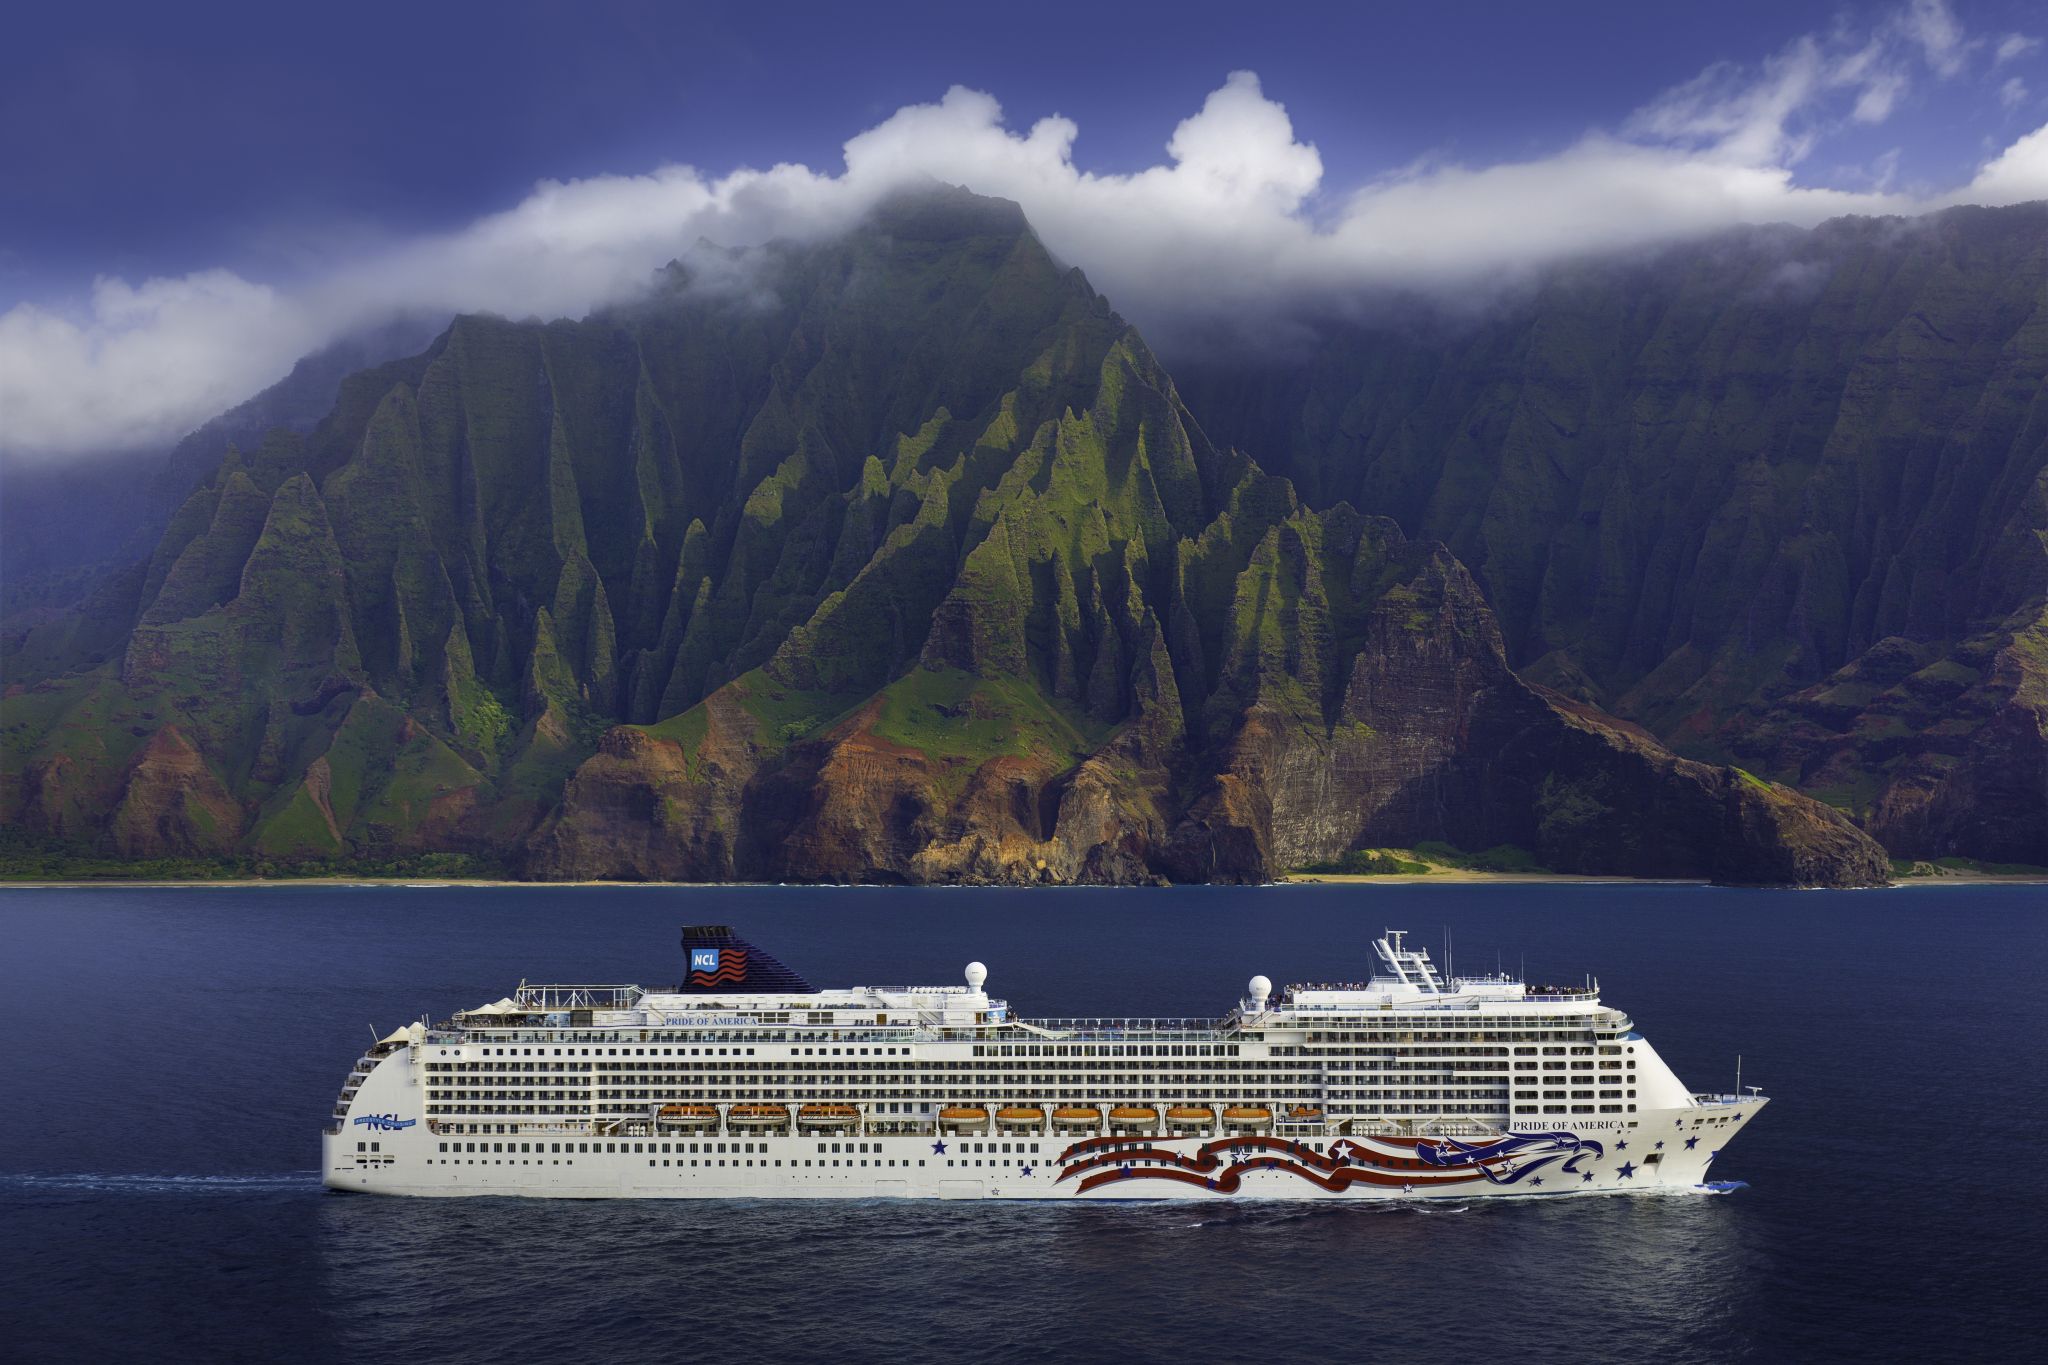 Norwegian’s Pride of America returns to Hawaii for islandhopping cruises